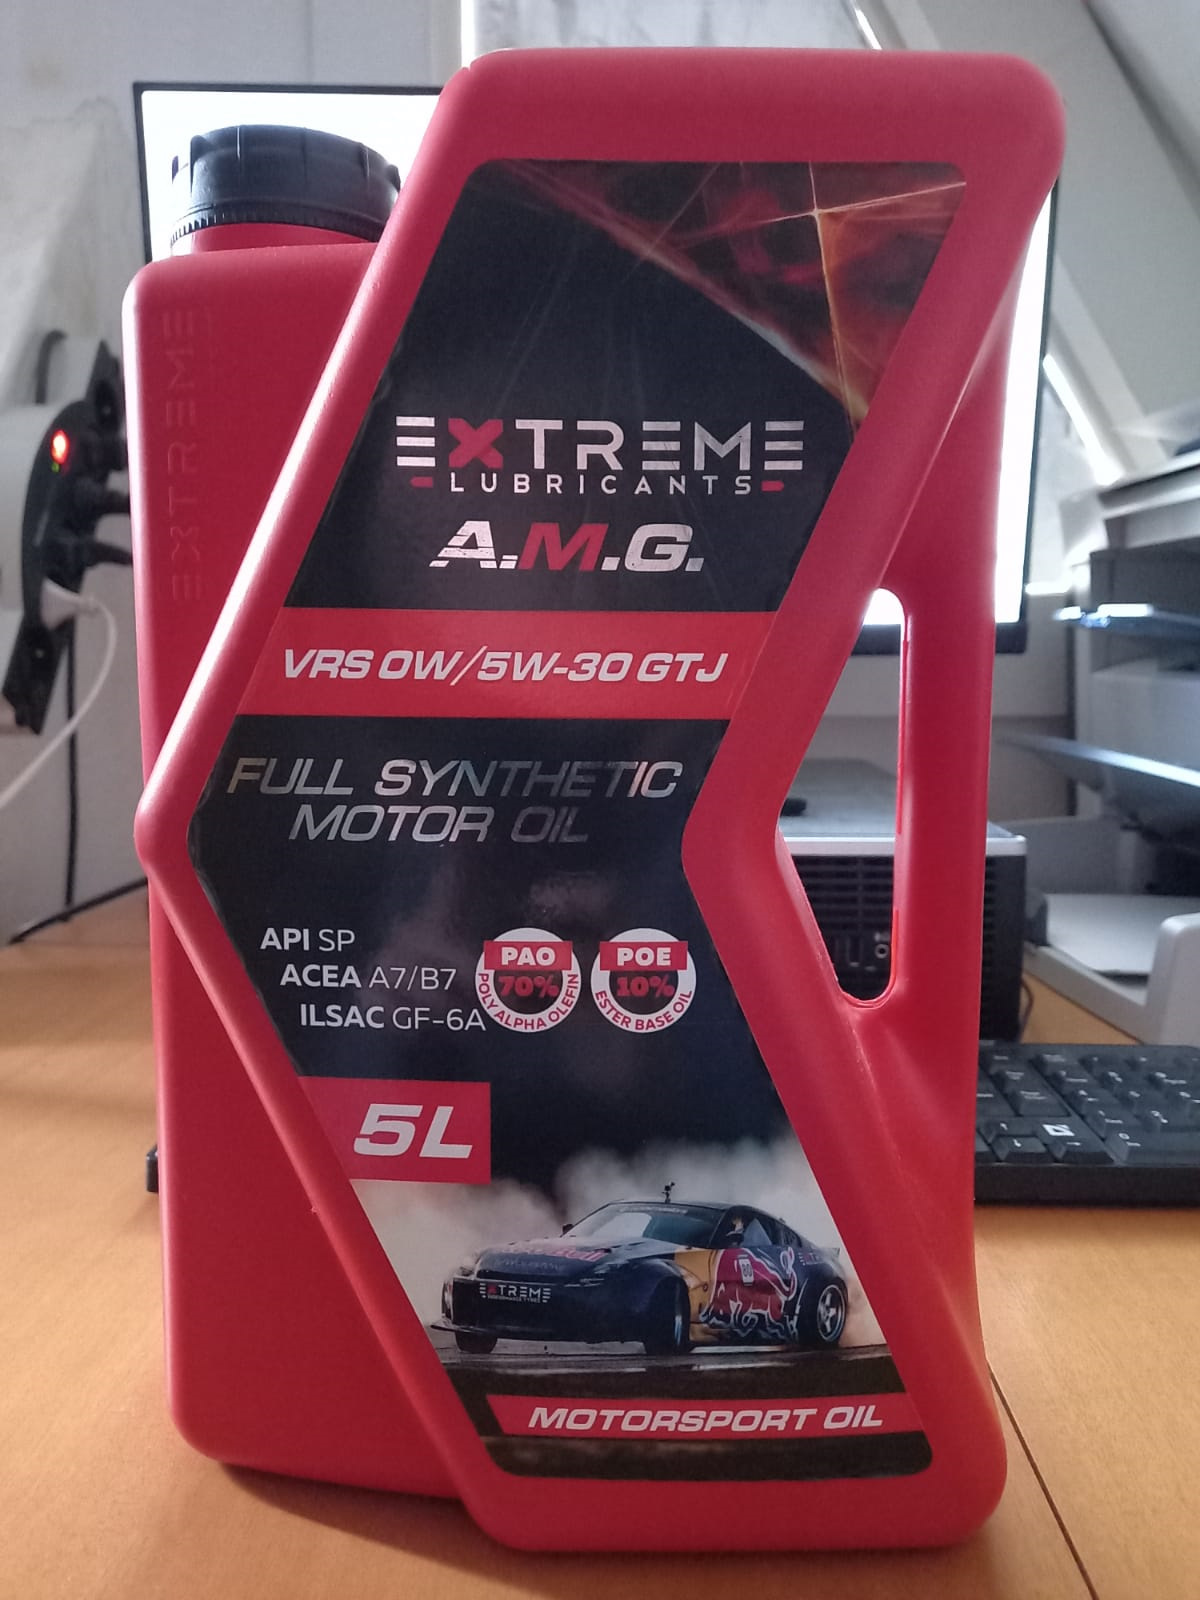 Extreme 5w30 купить. Масло AMG extreme 5w40. Extreme a.m.g. VRS 0w/5w-30 GTJ. Extreme a.m.g. VRS 0w/5w-30 GTI (1 Л). Extreme AMG vr2 0w-40.